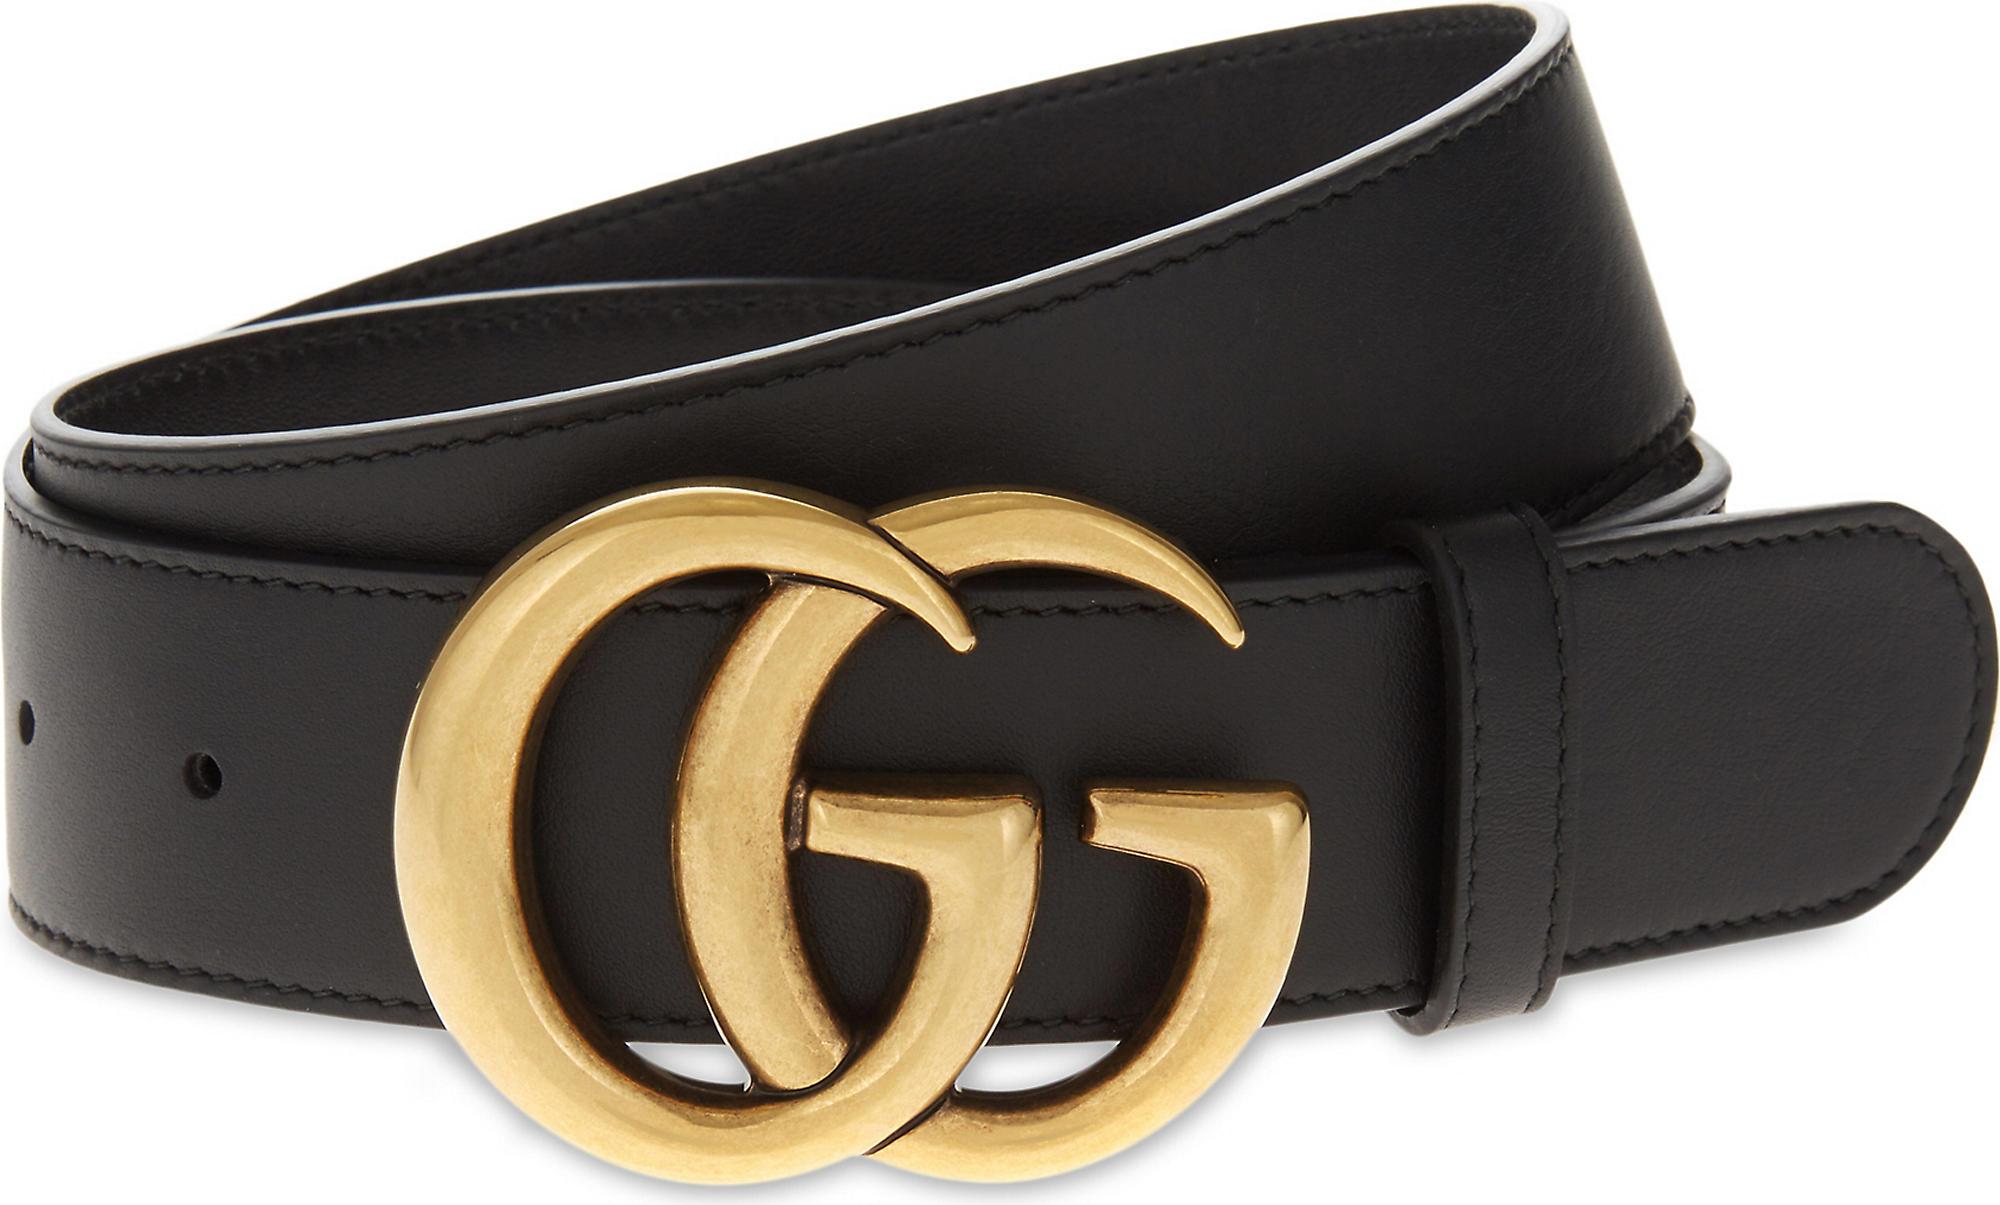 Gucci GG Leather Belt in Nero (Metallic) - Lyst